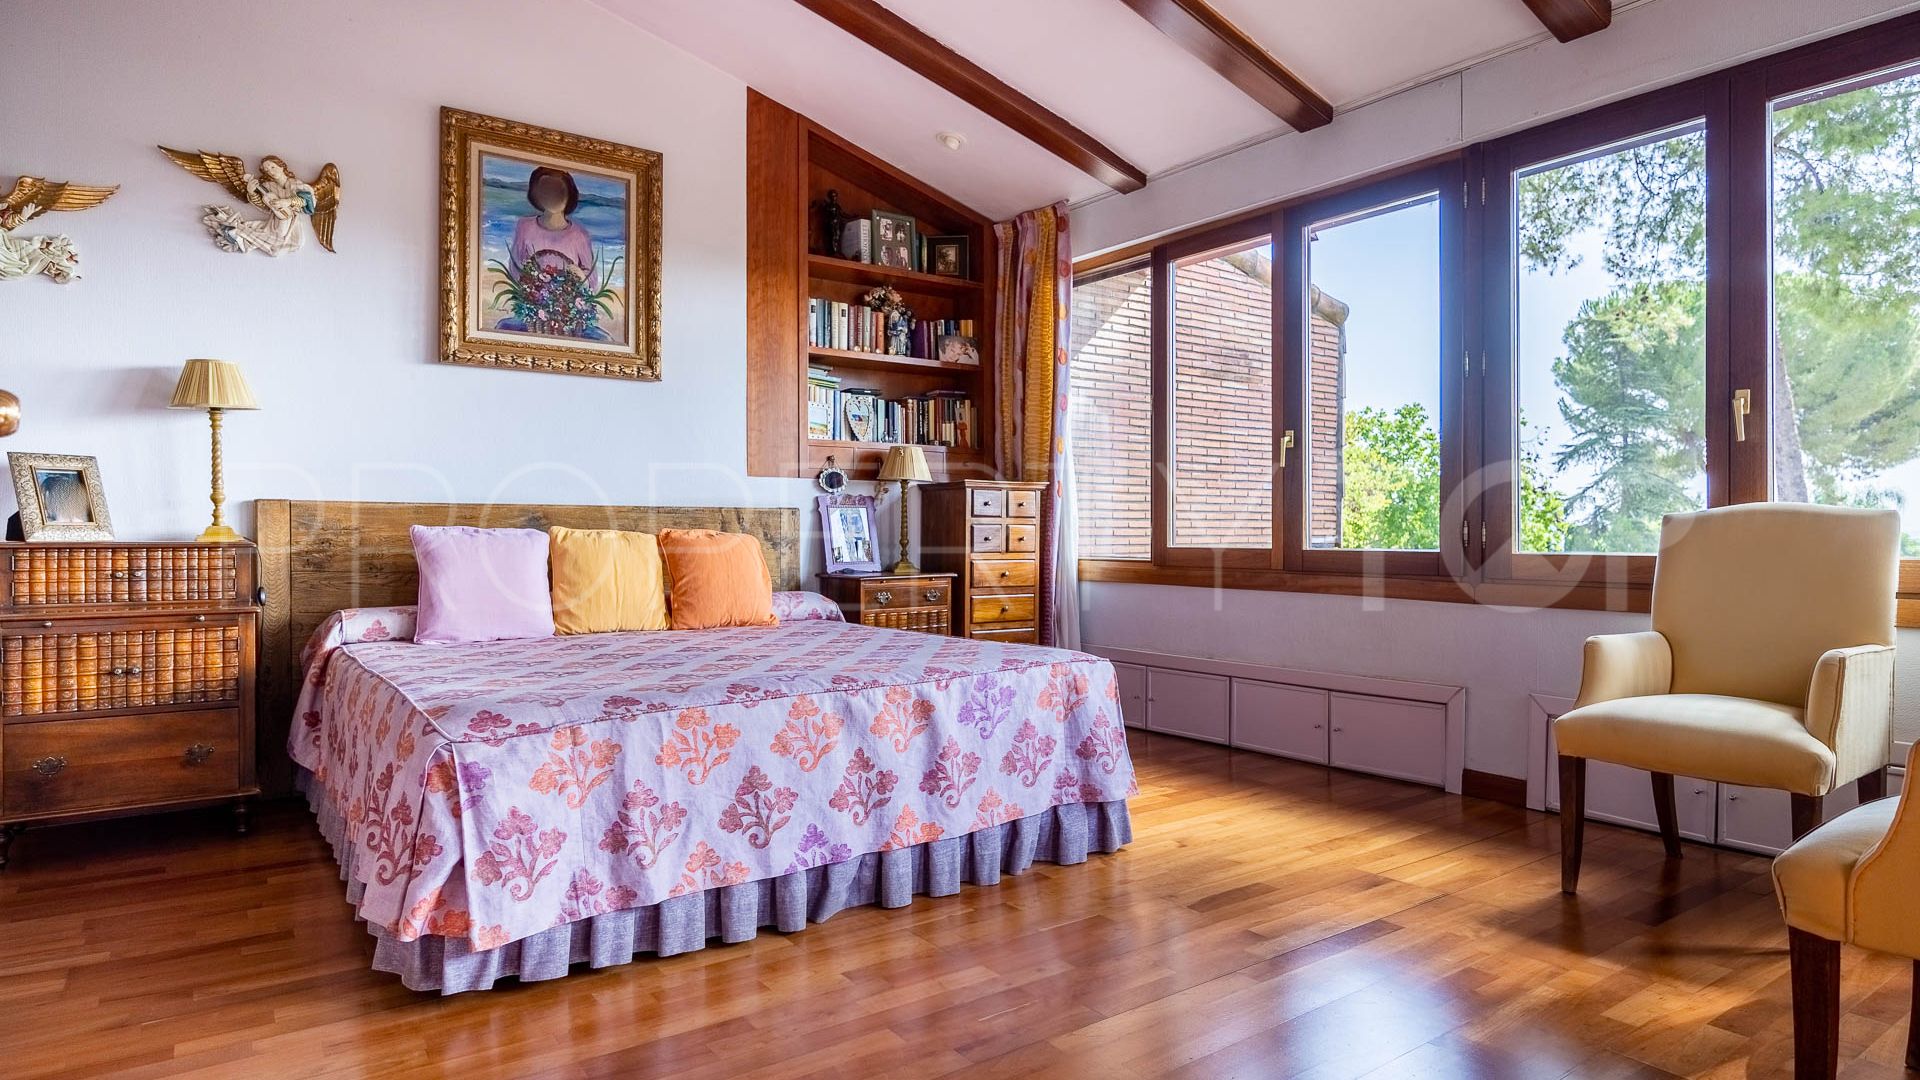 6 bedrooms house for sale in Castilleja de la Cuesta